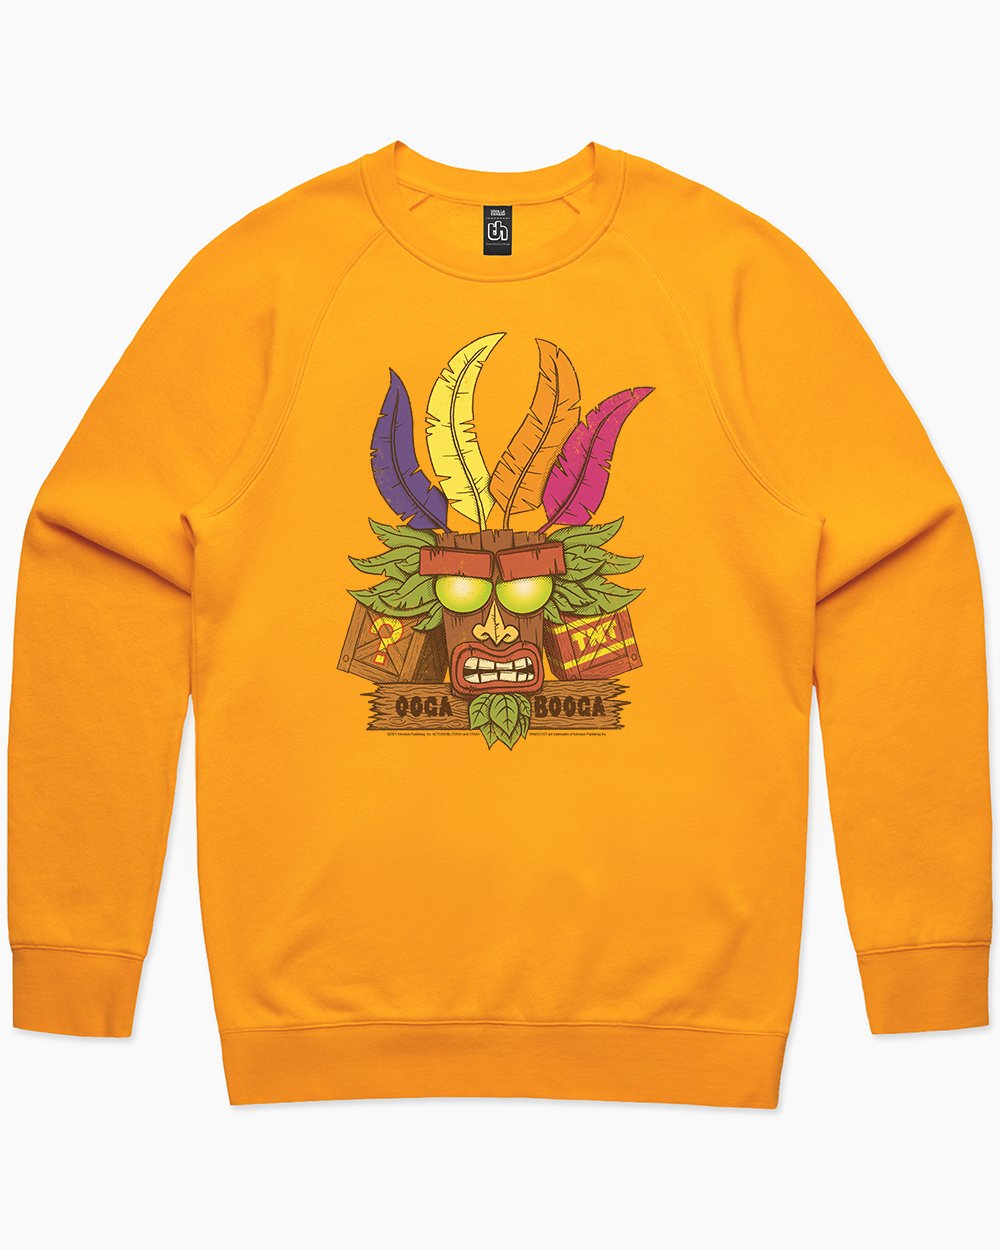 Stay Wild Sweatshirt Retro Flower Shirt Wildflower Hoodie - DadMomGift